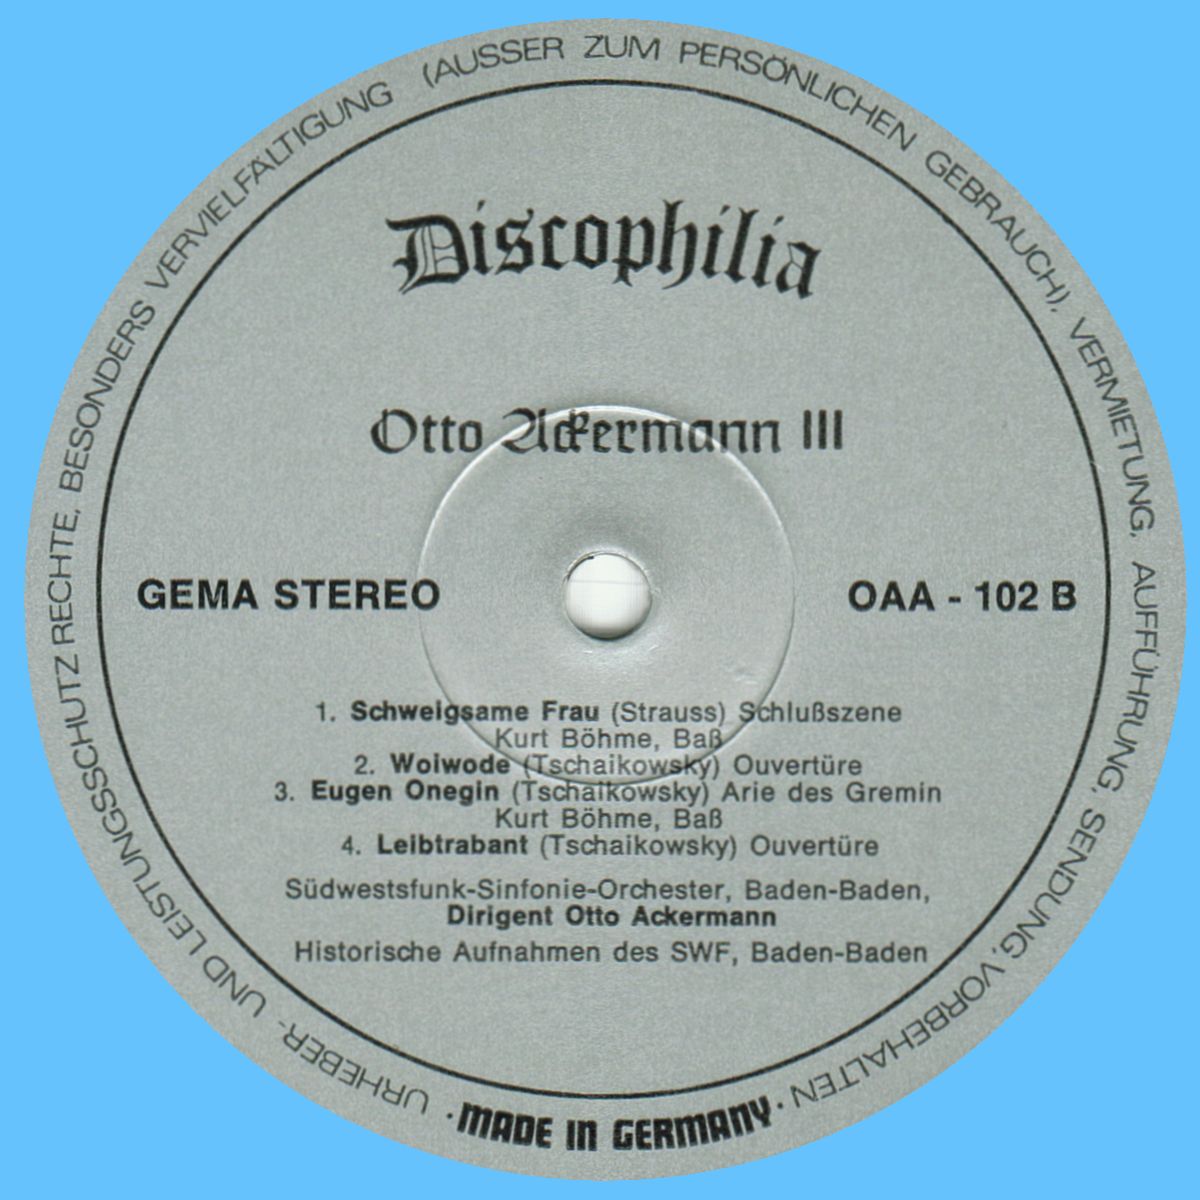 Discophilia OAA 102 Label 2 65C2FC